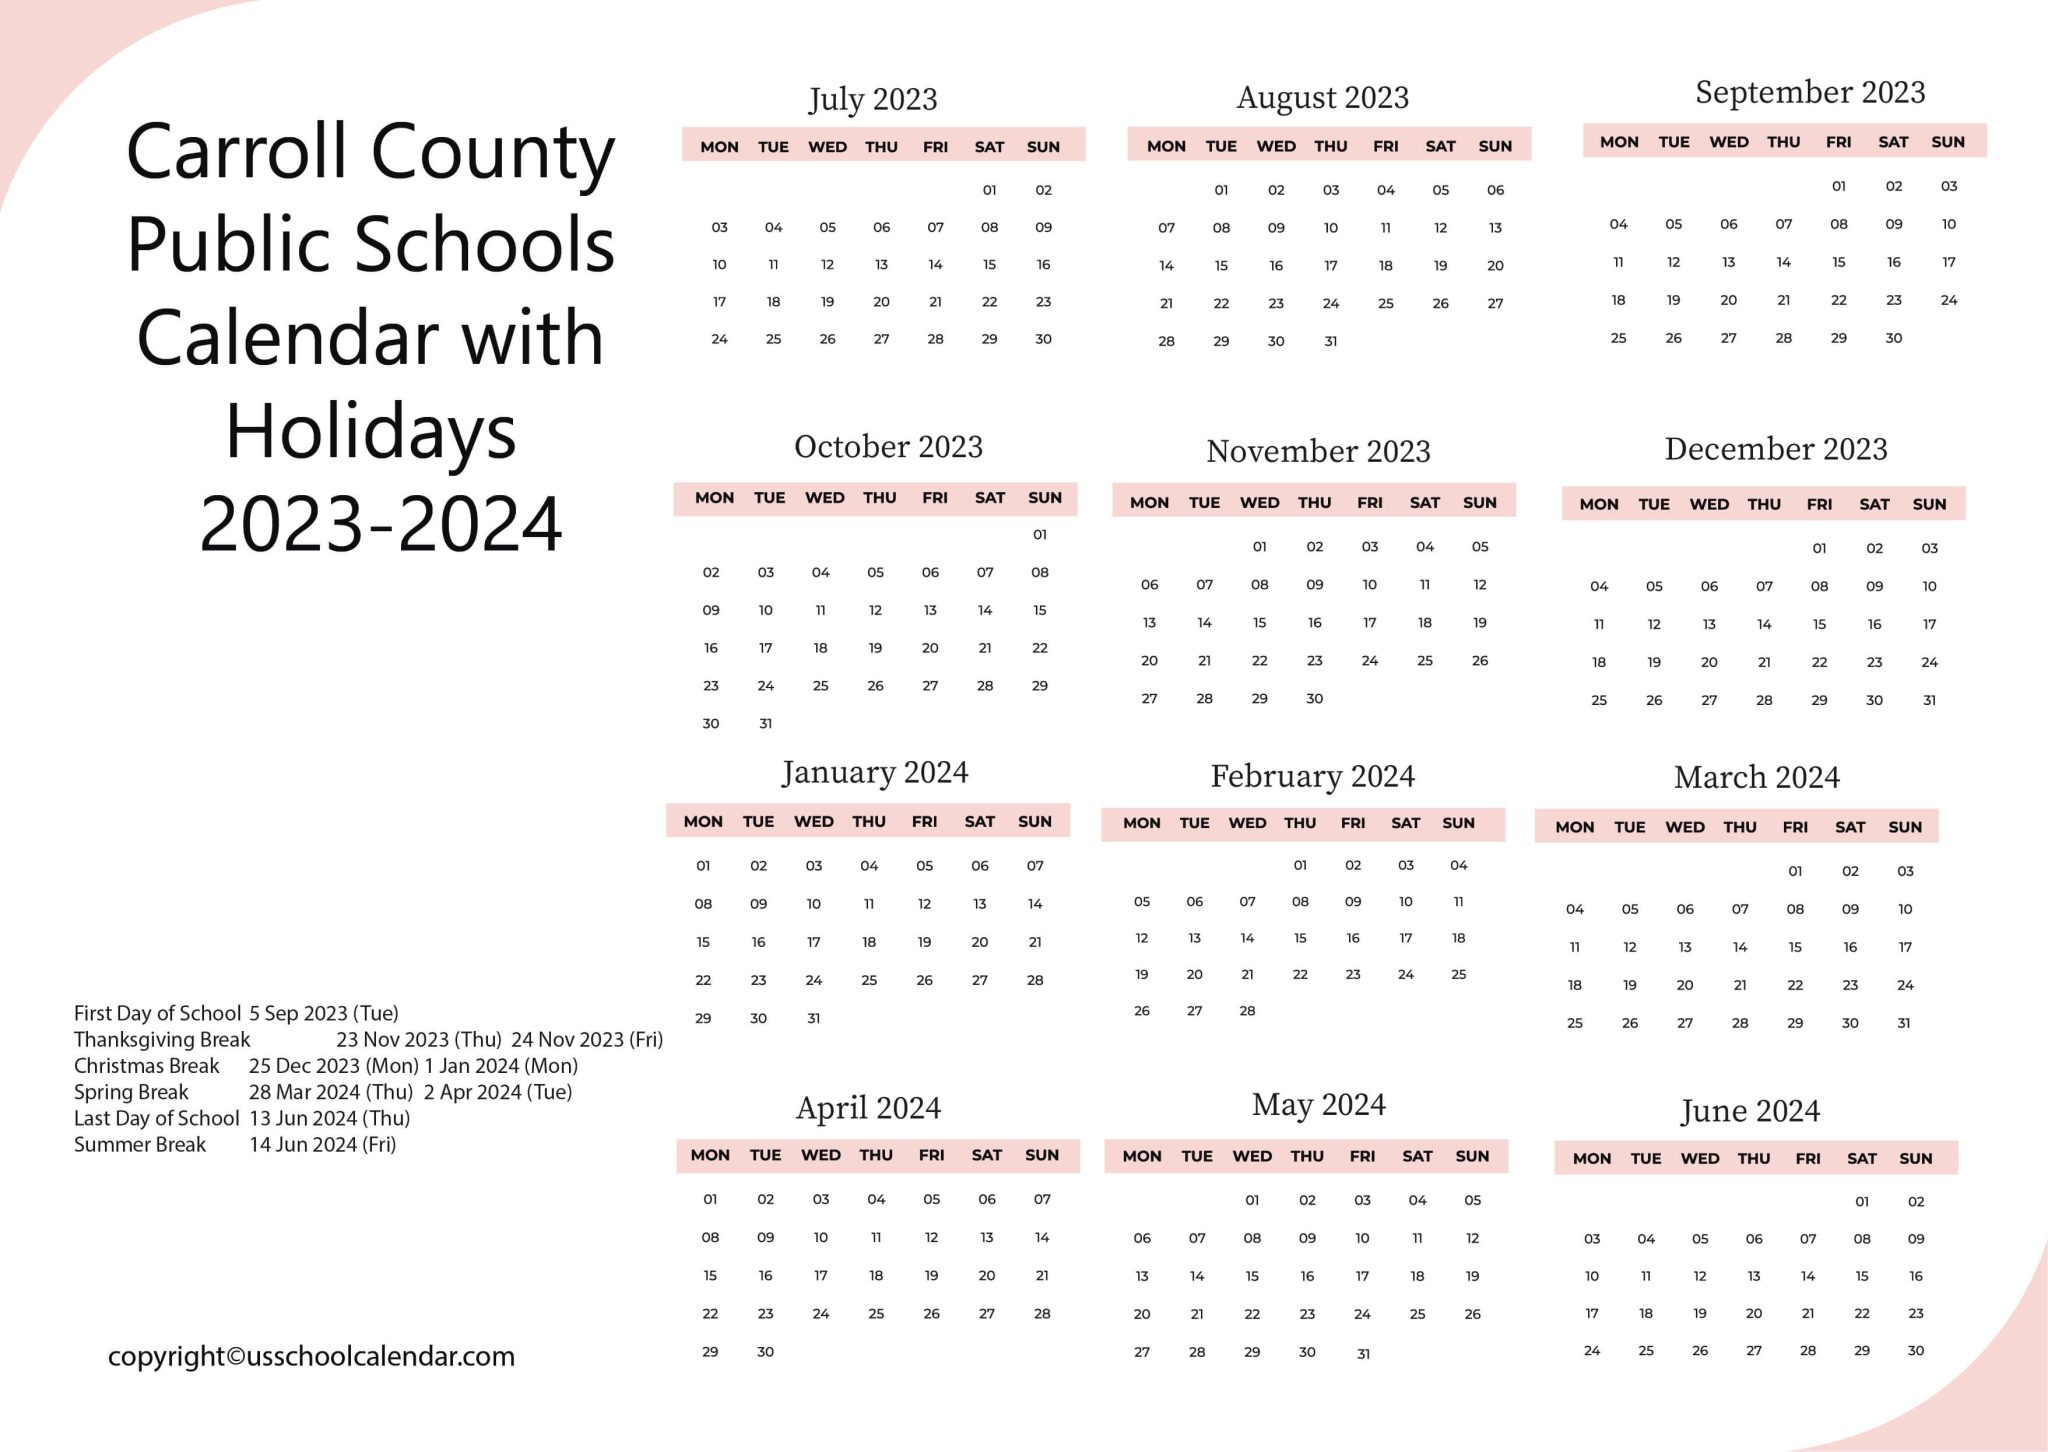 Carroll County Public Schools Calendar with Holidays 20232024